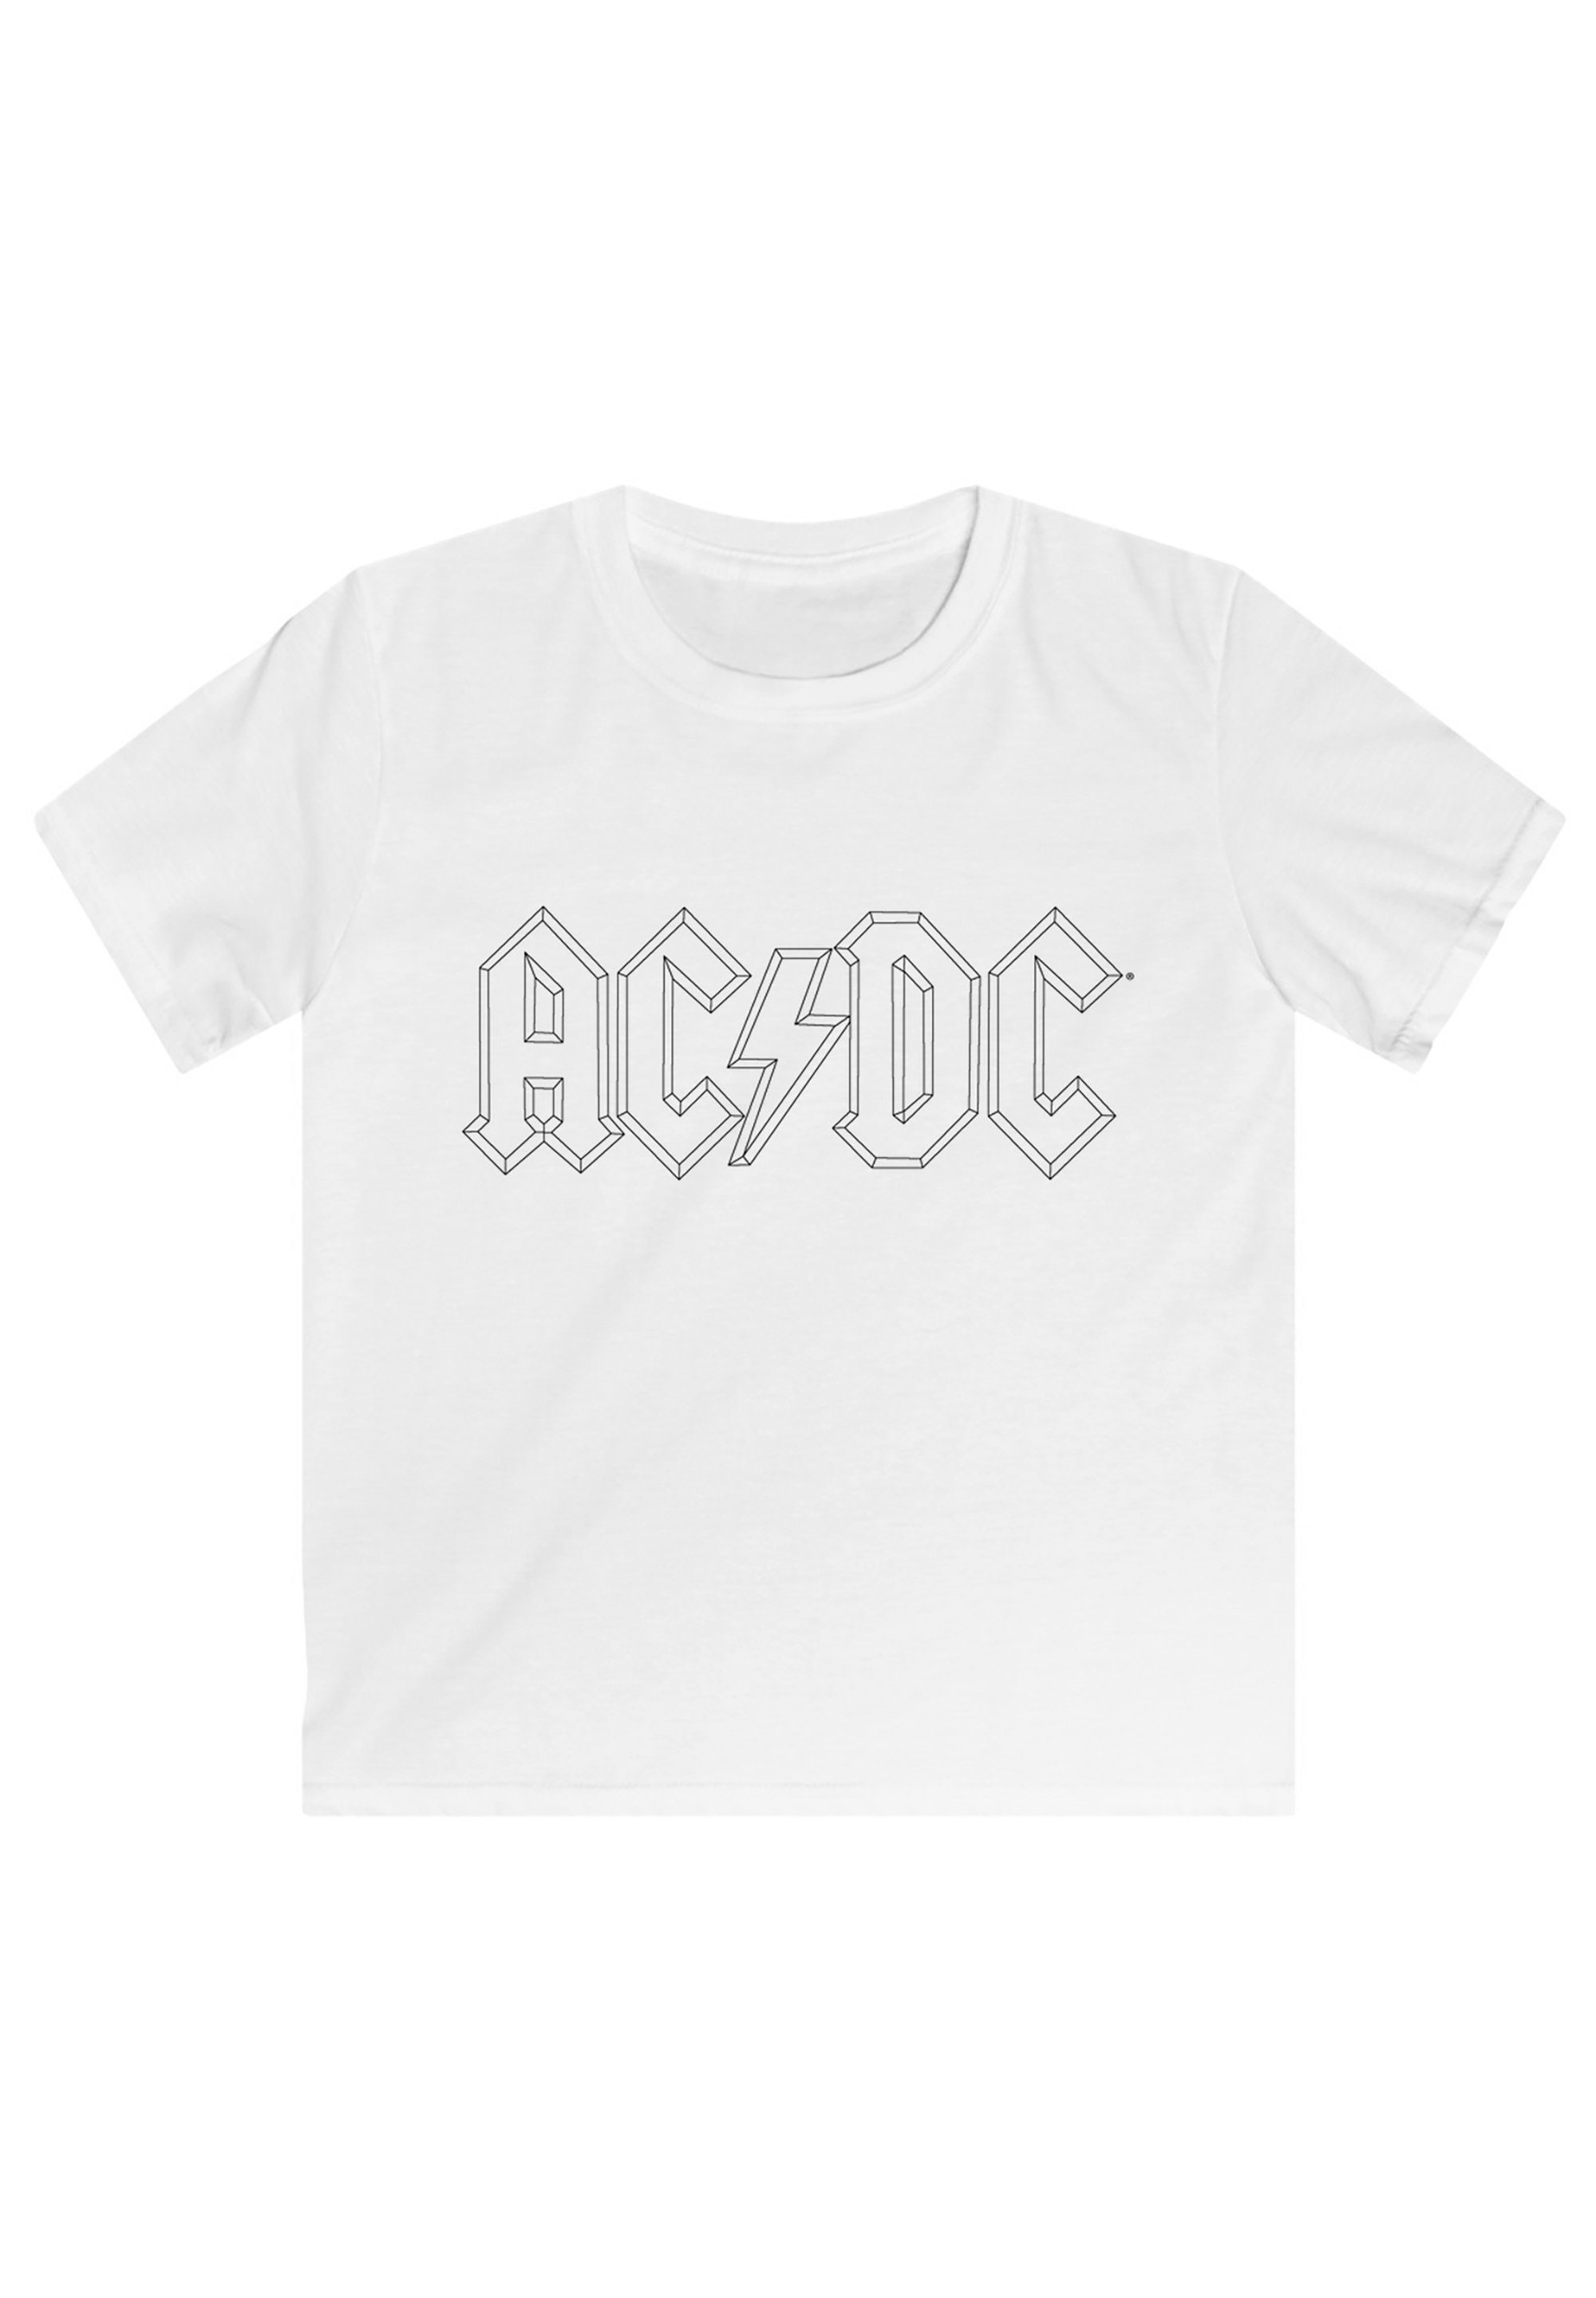 Premium Musik Rock Outline Unisex - Merch,Jungen,Mädchen,Bandshirt Metal Merch F4NT4STIC Black Logo ACDC T-Shirt Kinder,Premium Fan